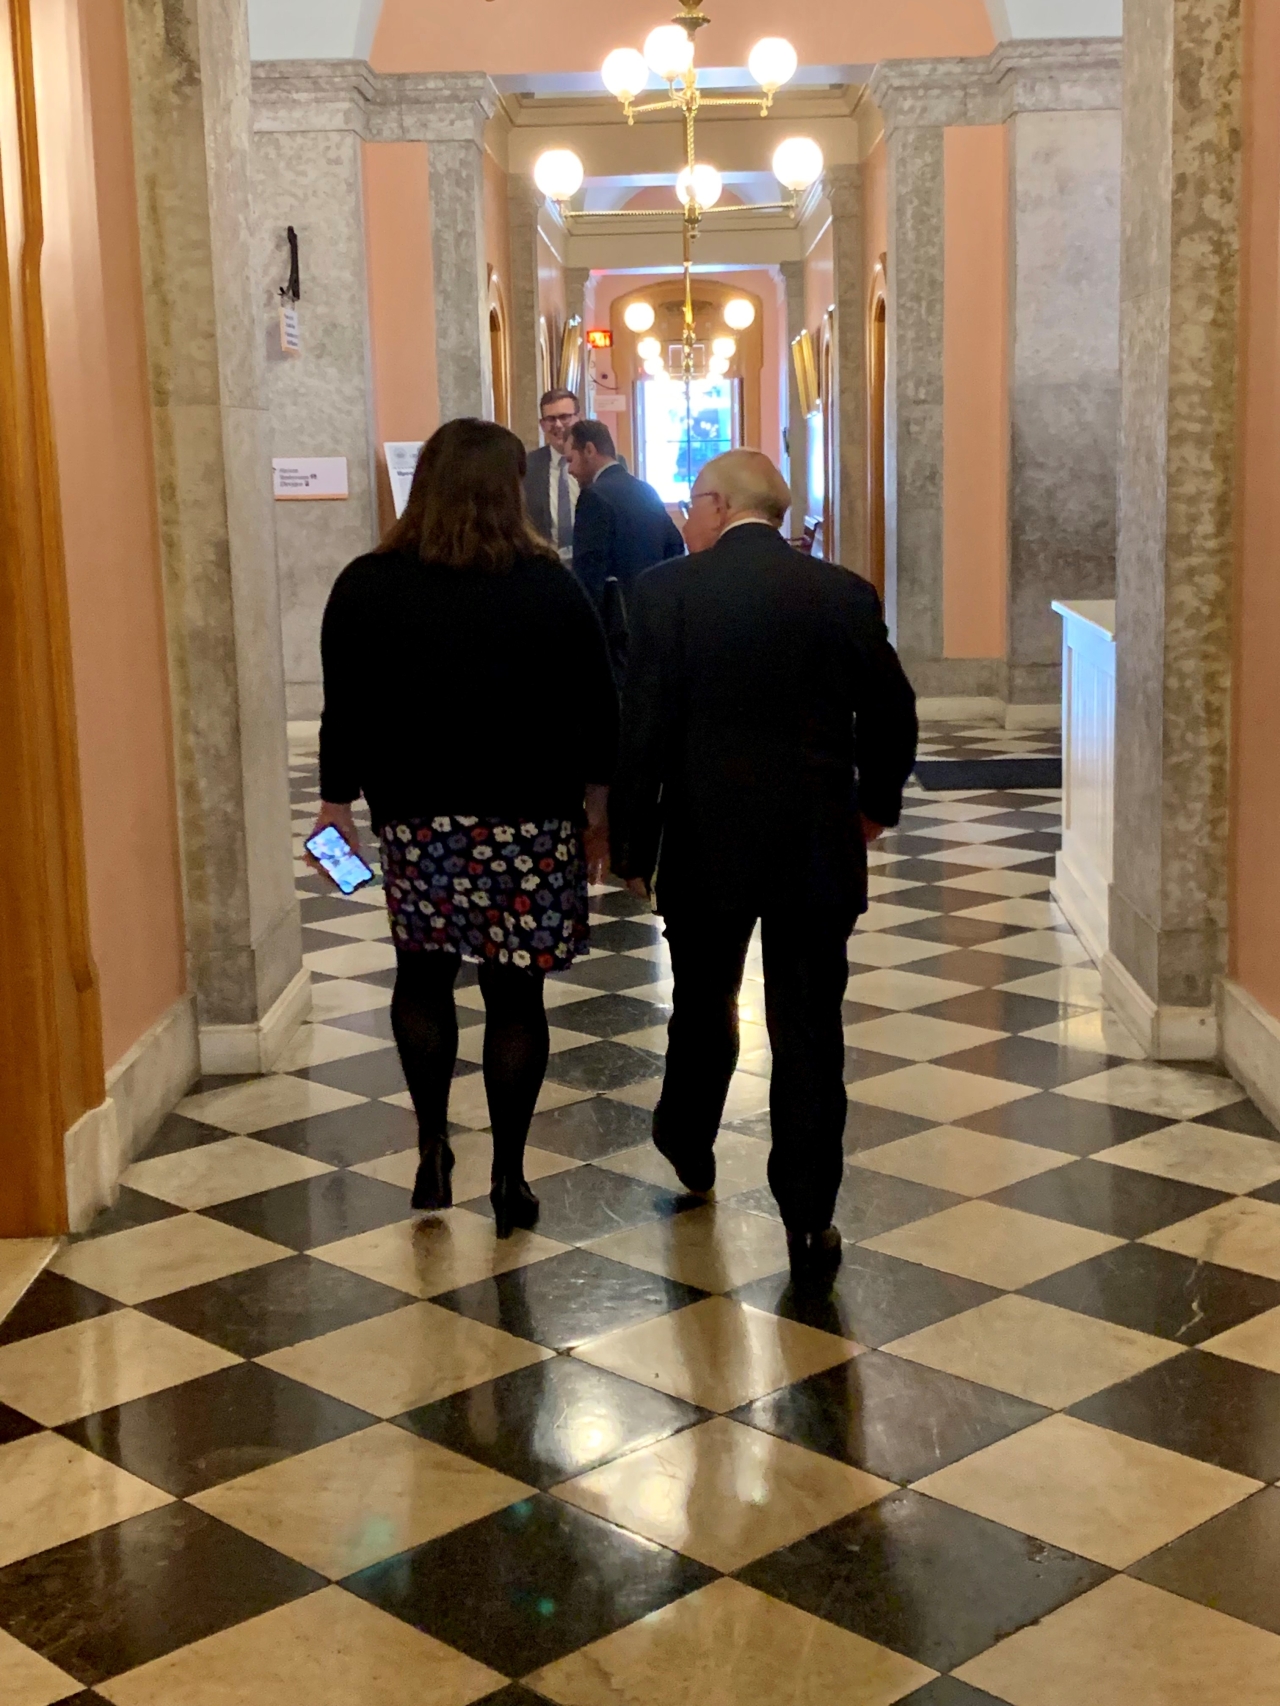 Rep. Miranda walks the halls of the Ohio Statehouse